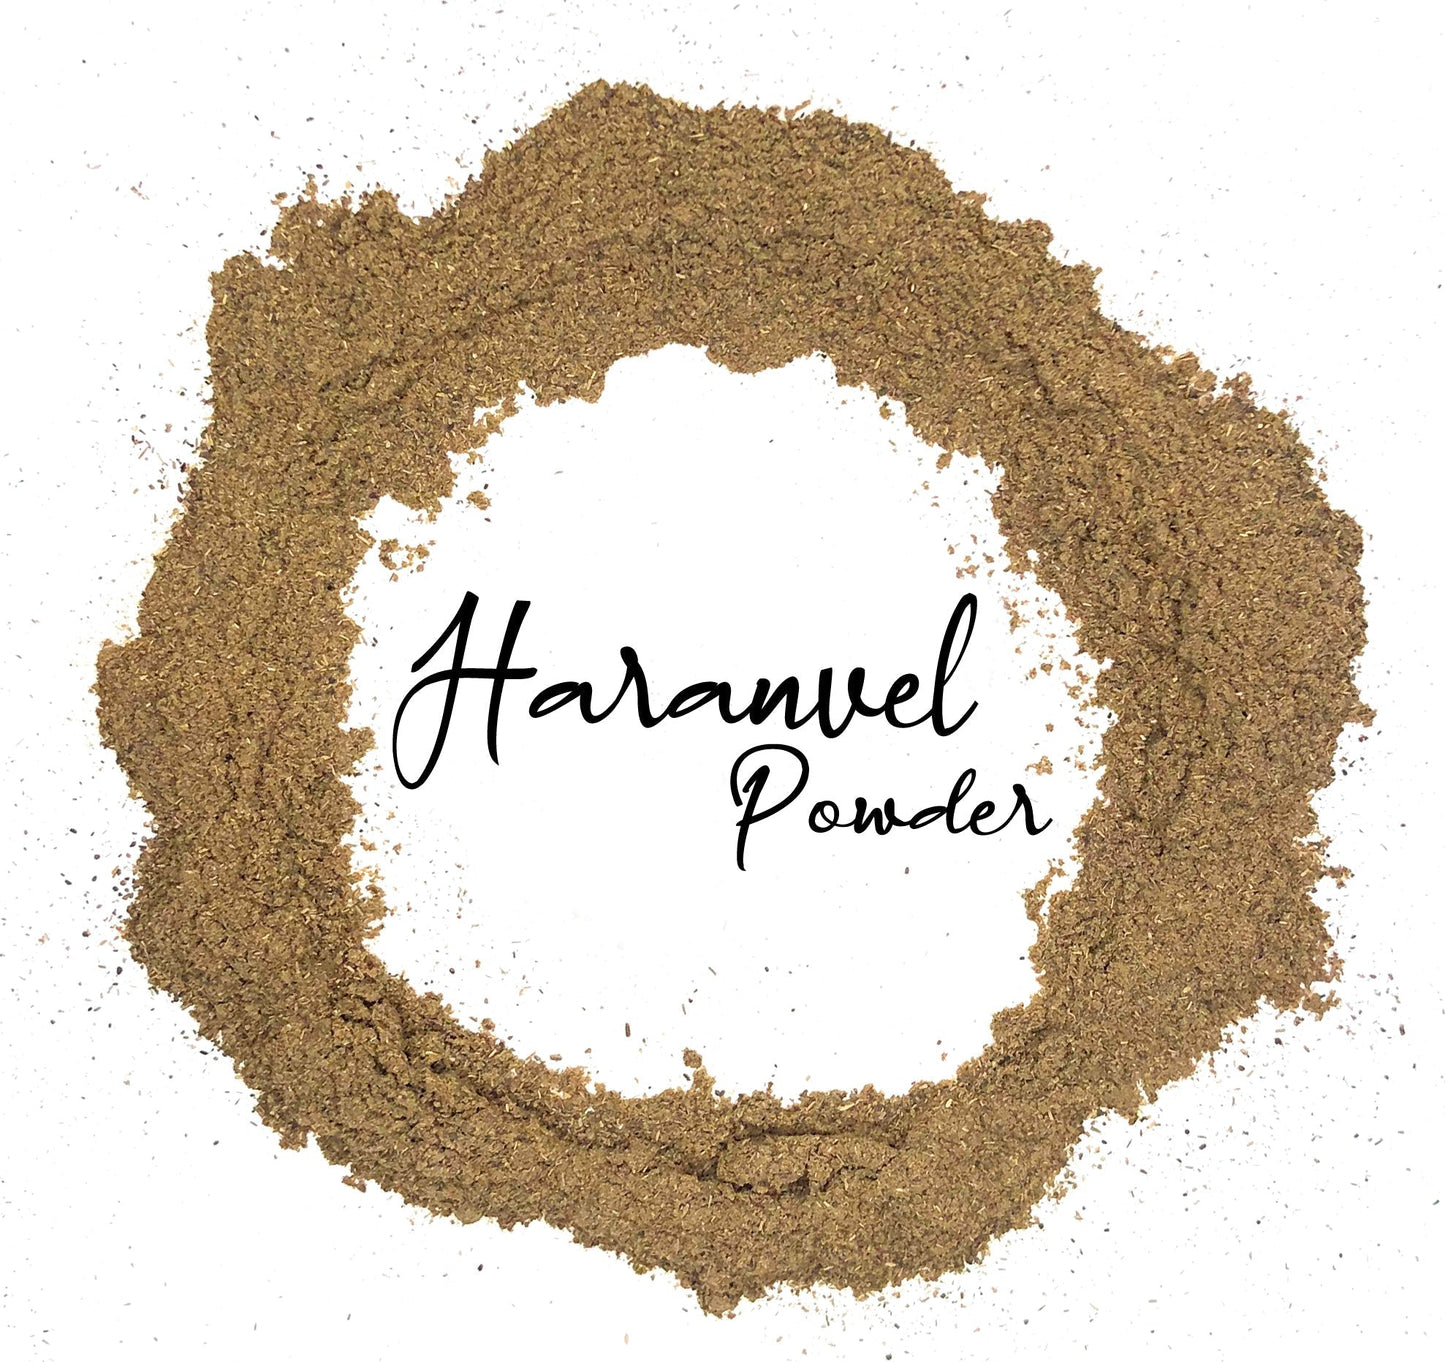 Wholesale Spices & Herbs - Haranvel Powder 1lb (454g) Bag